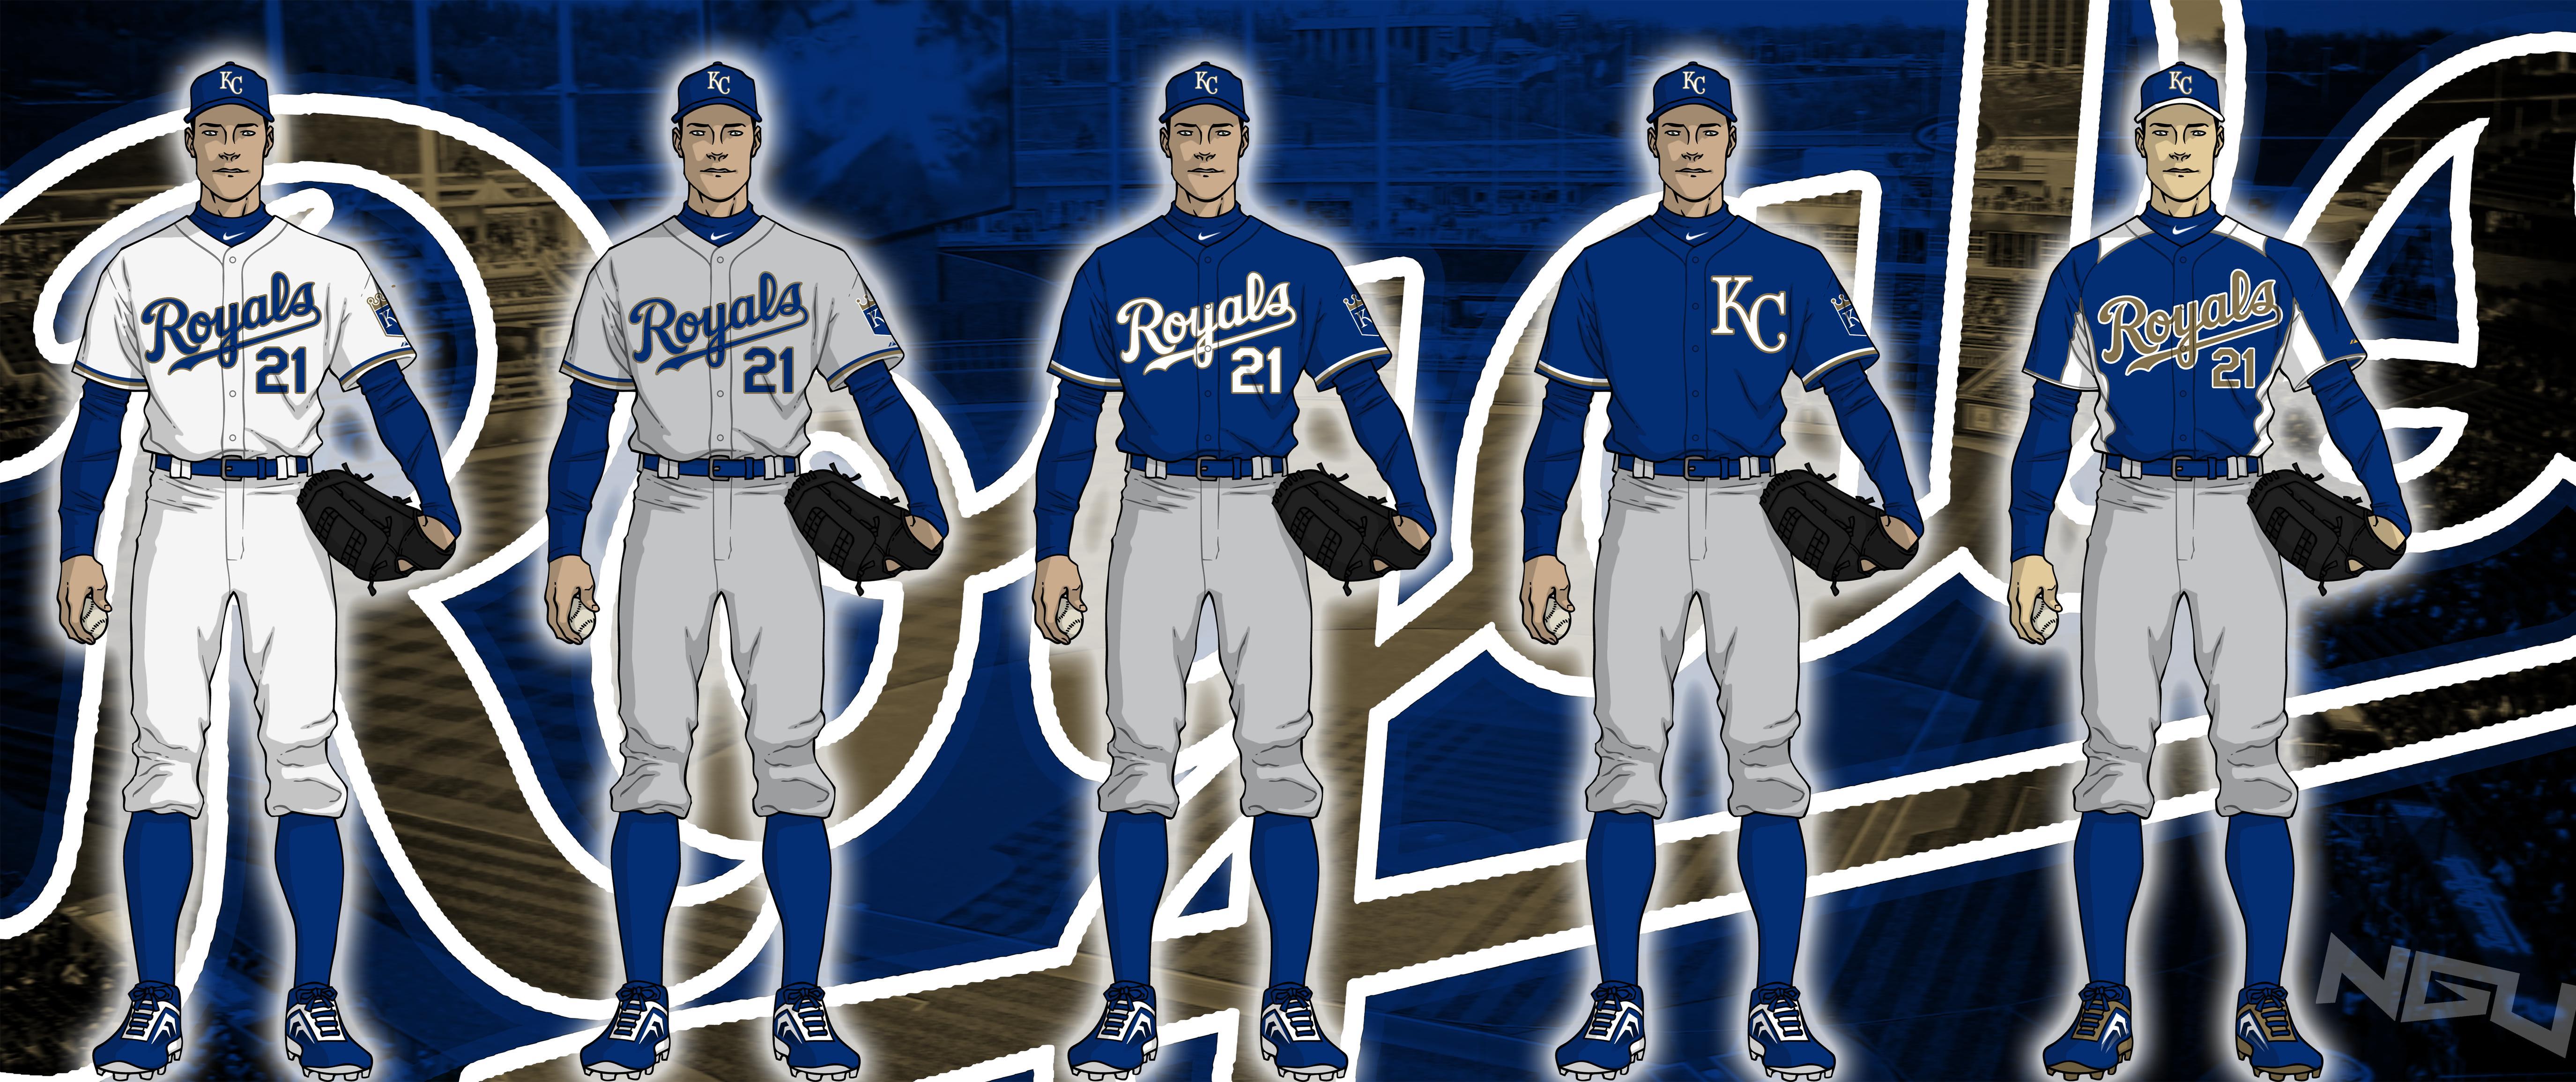 Royals Baseball Logo - Kansas City Royals Concept Uniforms Creamer's